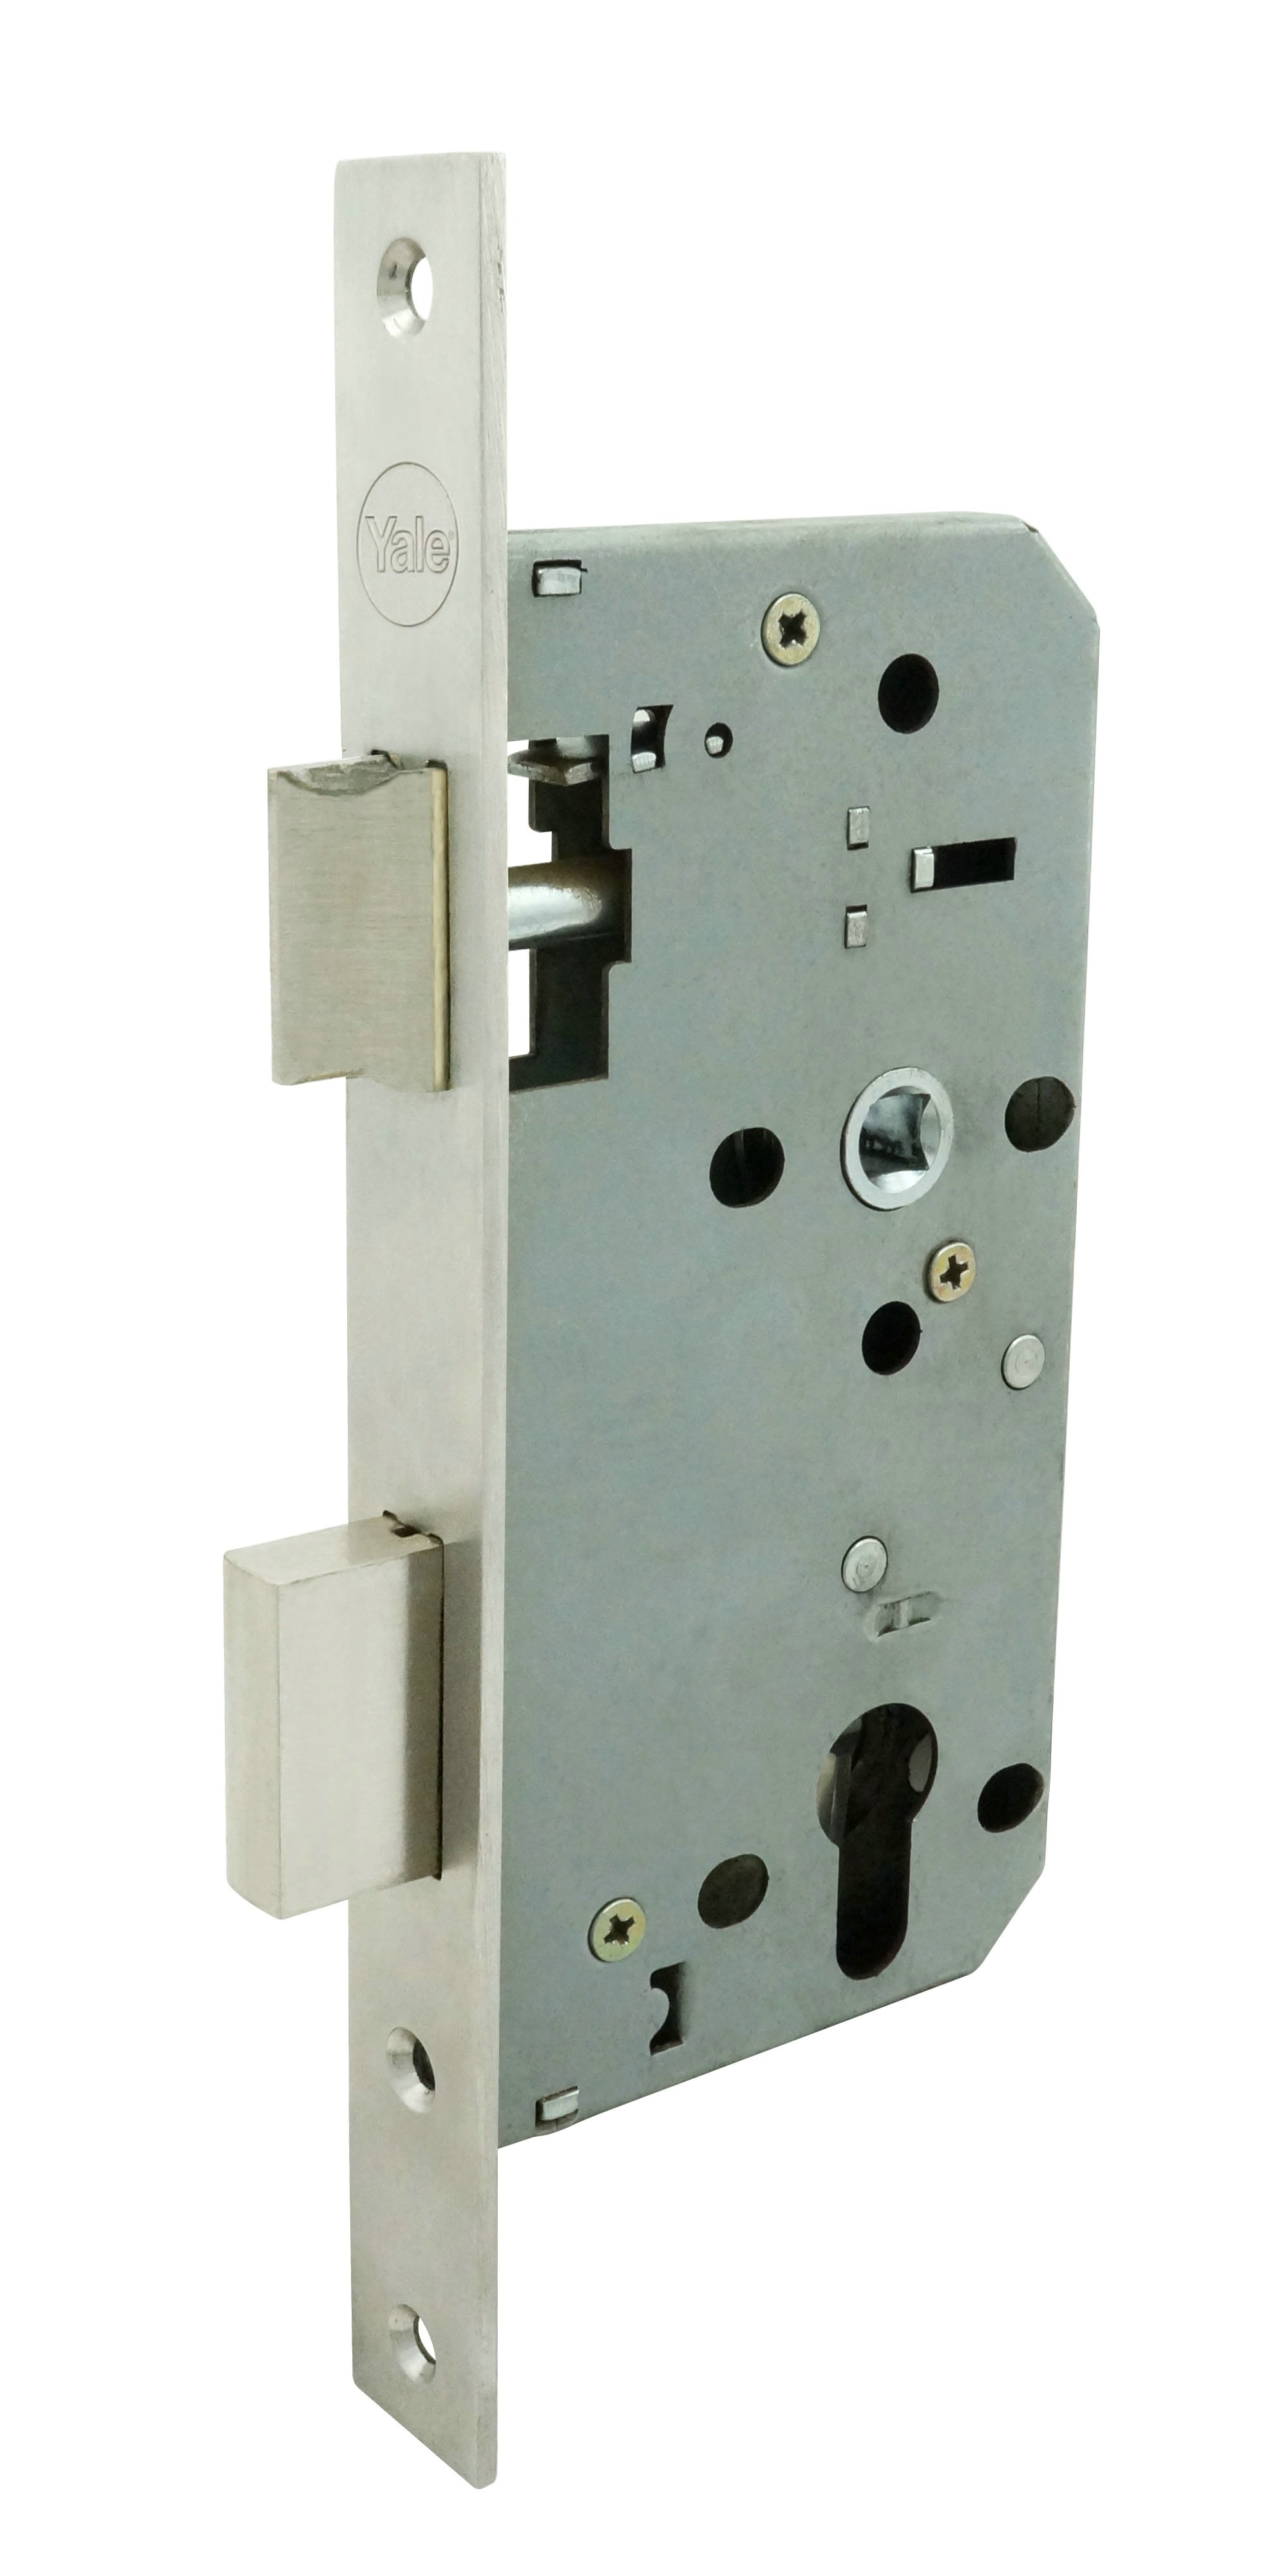 Pestillo Perfil de euro DIN lockcases: sashlock Nightlatch; 60mm// bloqueo